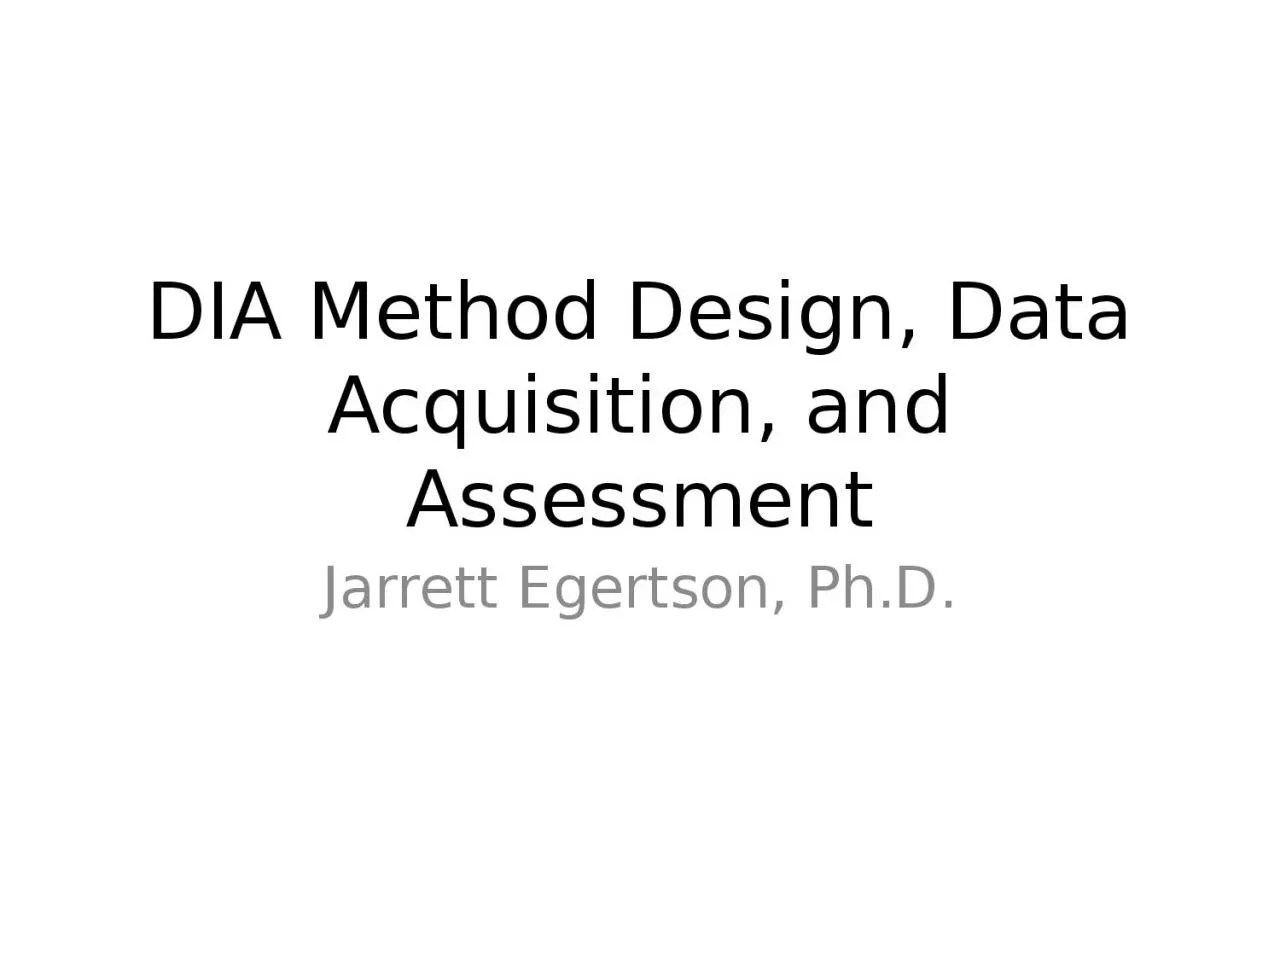 DIA Method Design, Data Acquisition, and Assessment